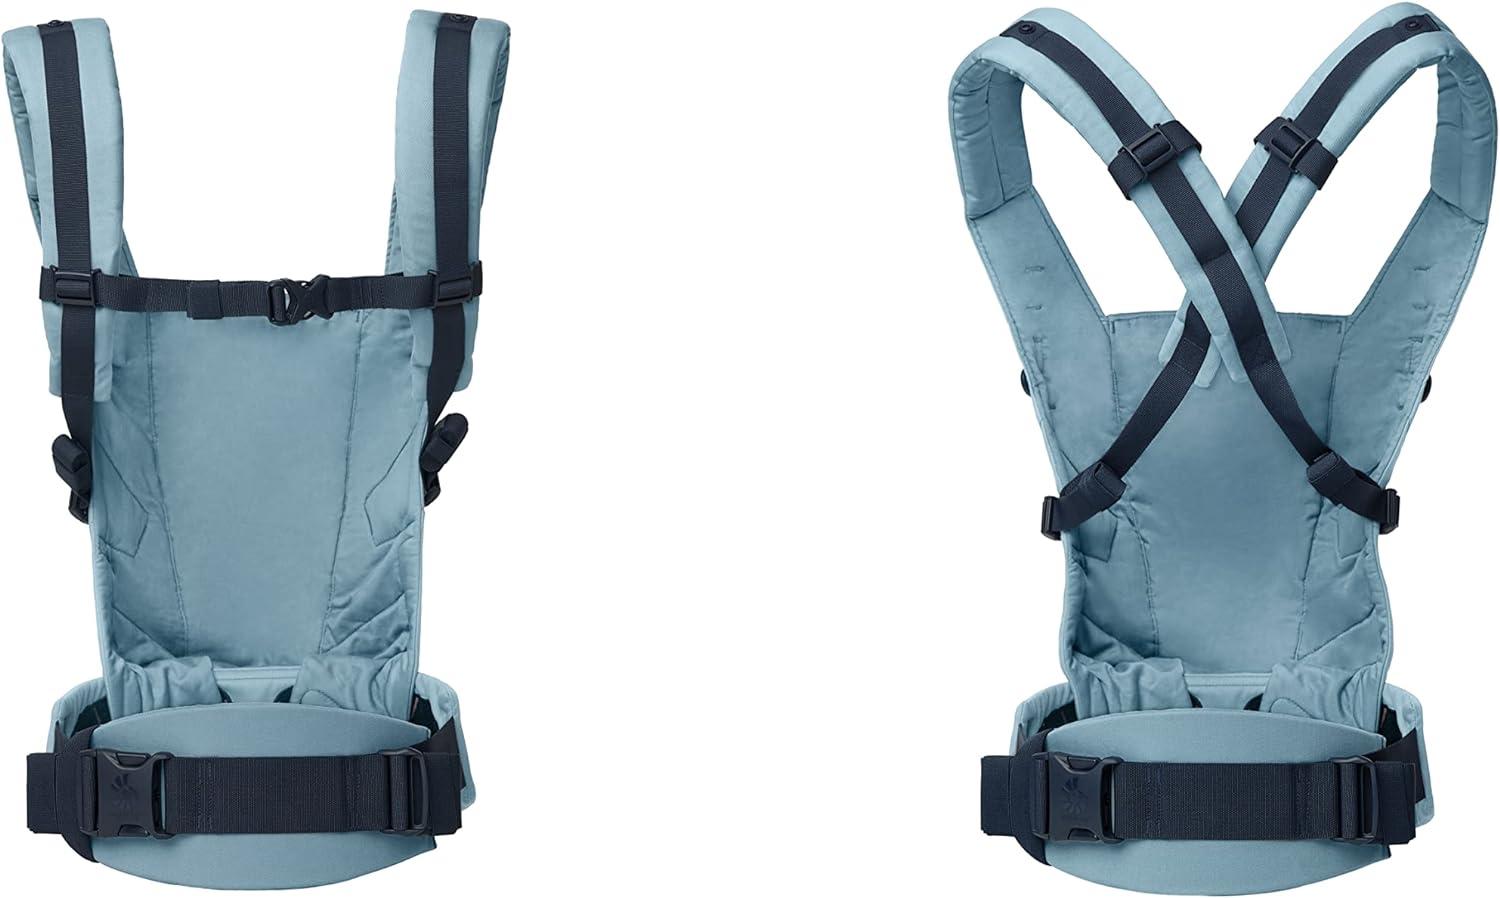 Ergobaby Adapt Adjustable 3-position Ergonomic Baby - Toddler Carrier